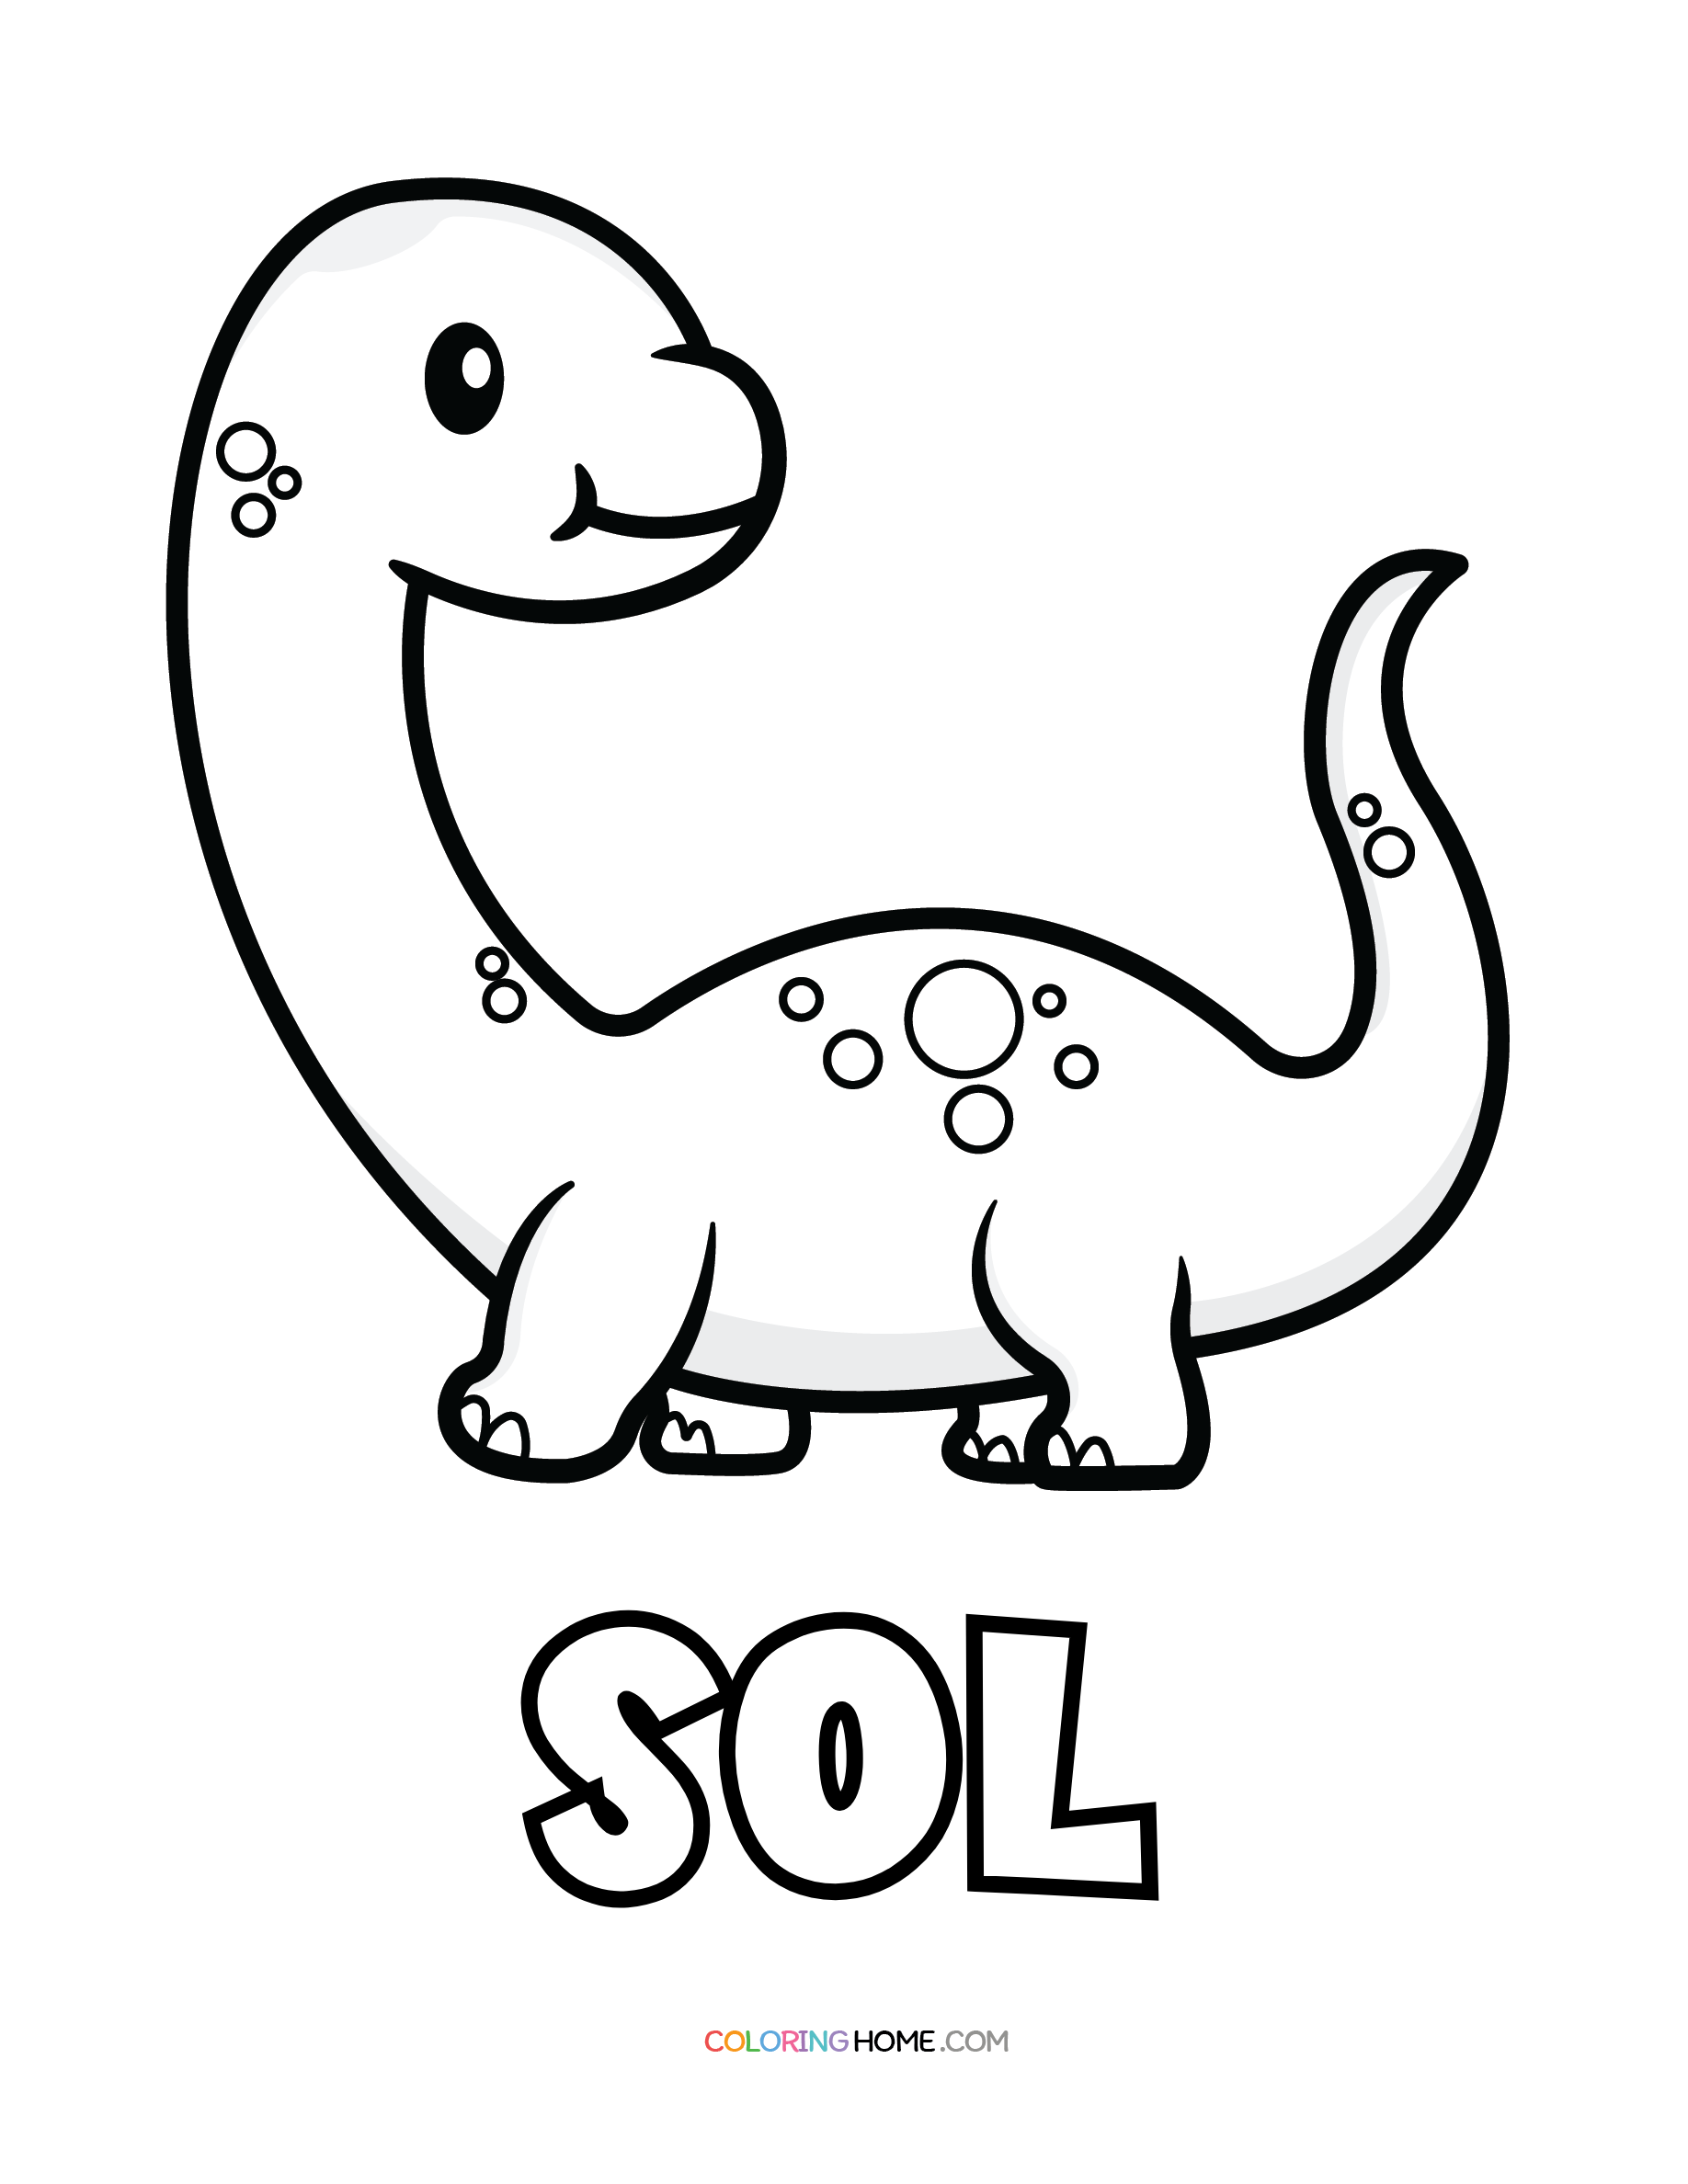 Sol dinosaur coloring page